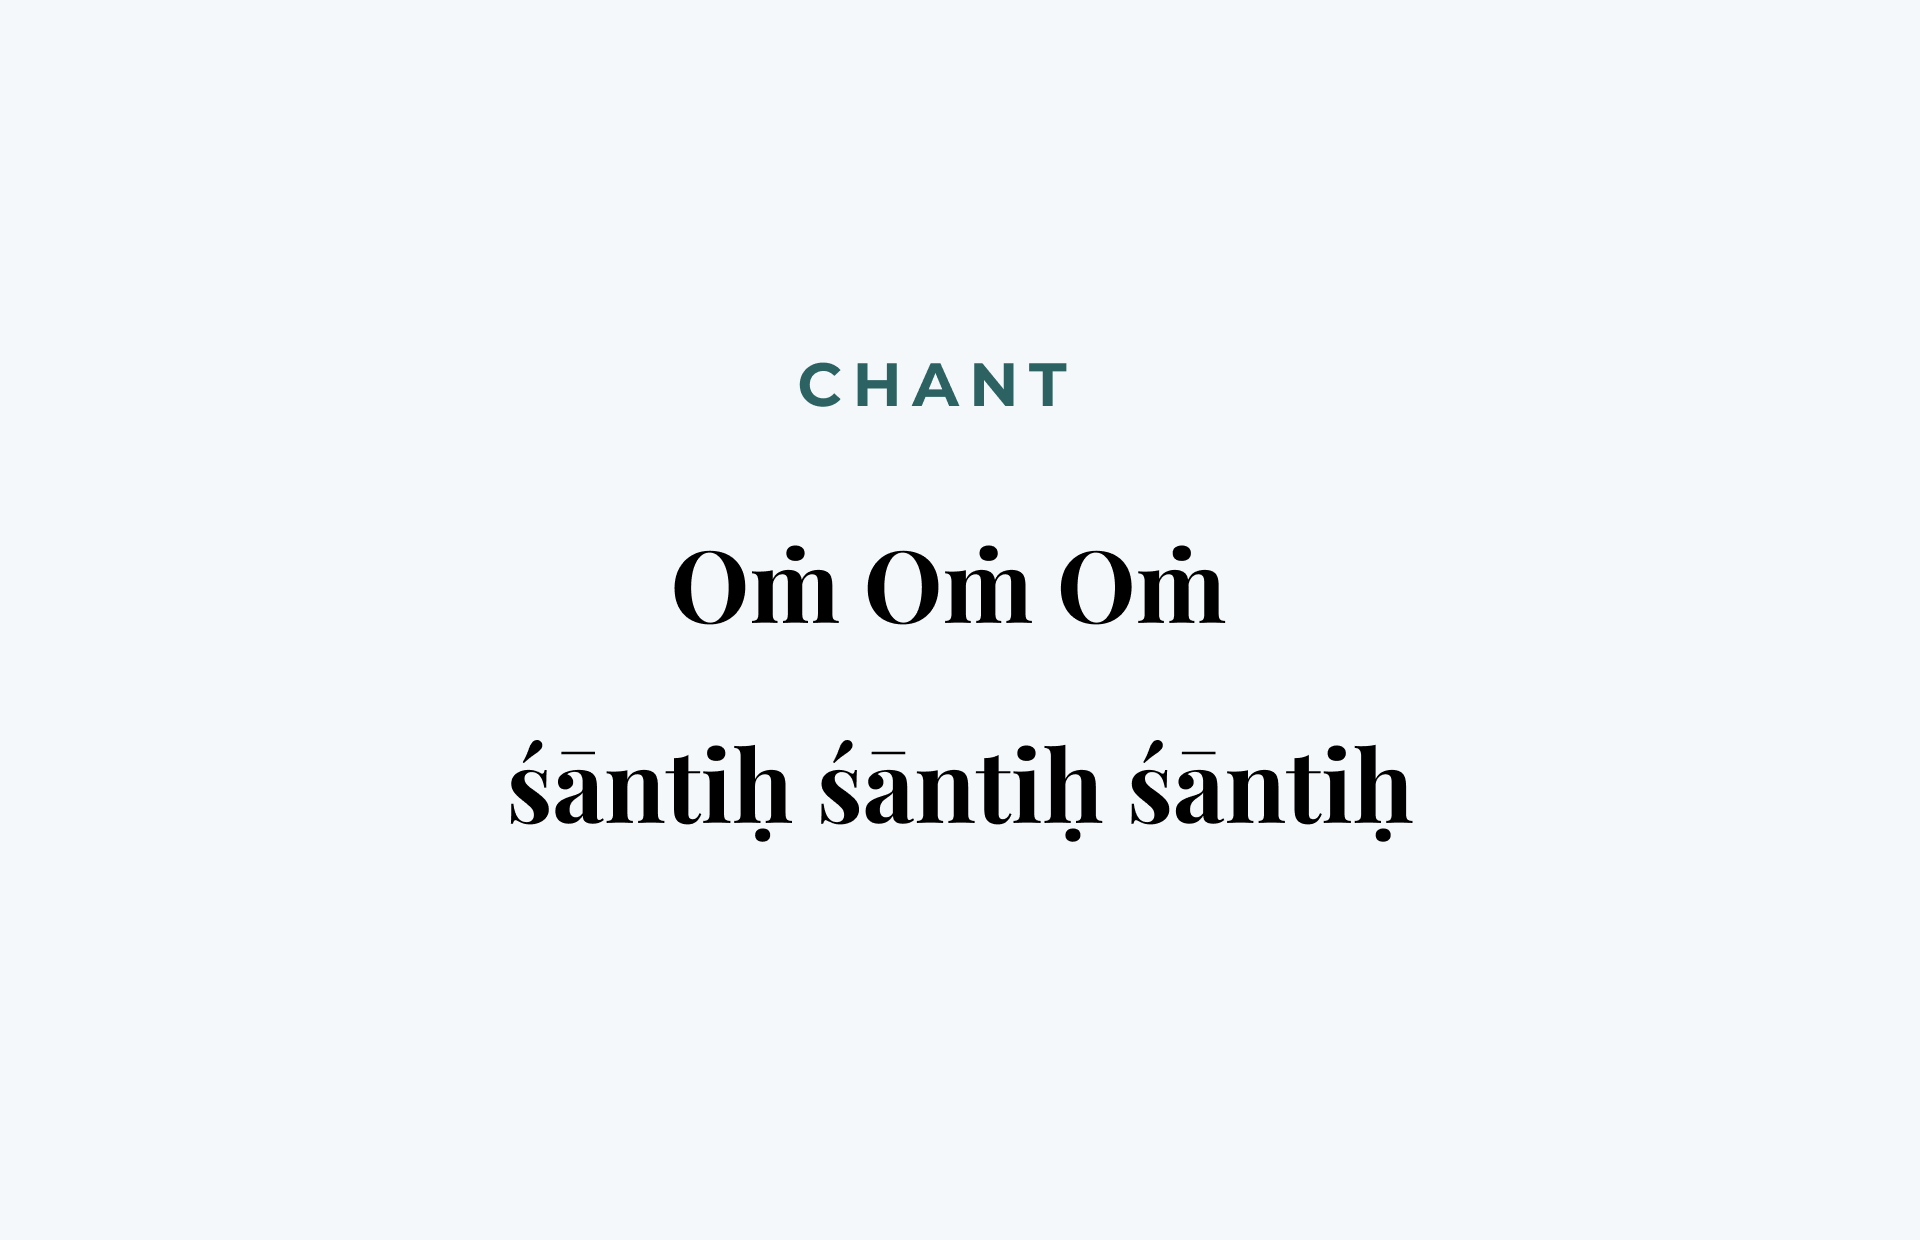 Chant: Om, Shantih, Shantih, Shantih